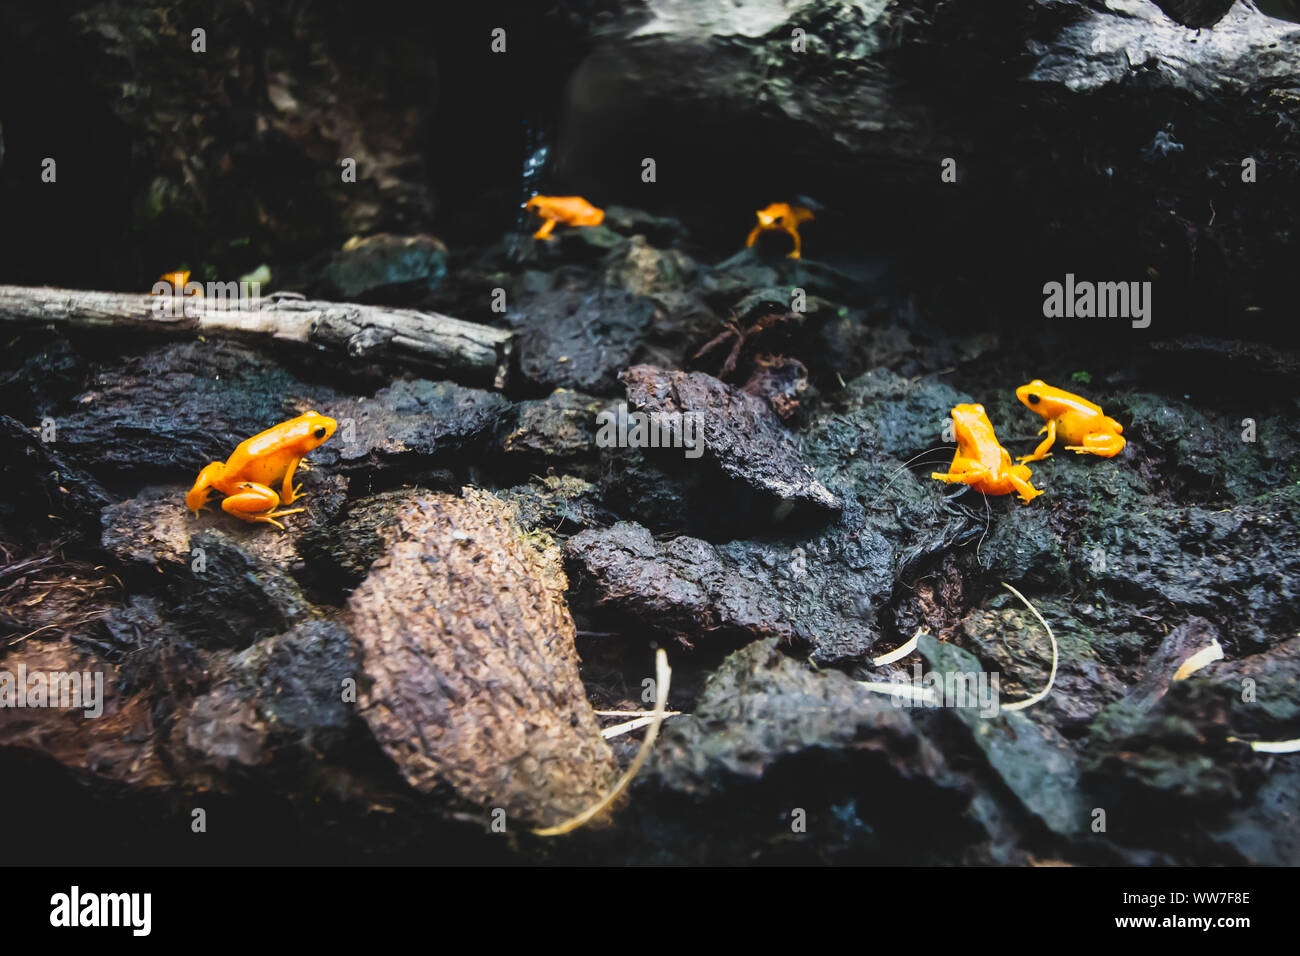 Rana venenosa, poison dart frog Phyllobates Terribilis. Naranja amarillo de ranas tropicales Foto de stock